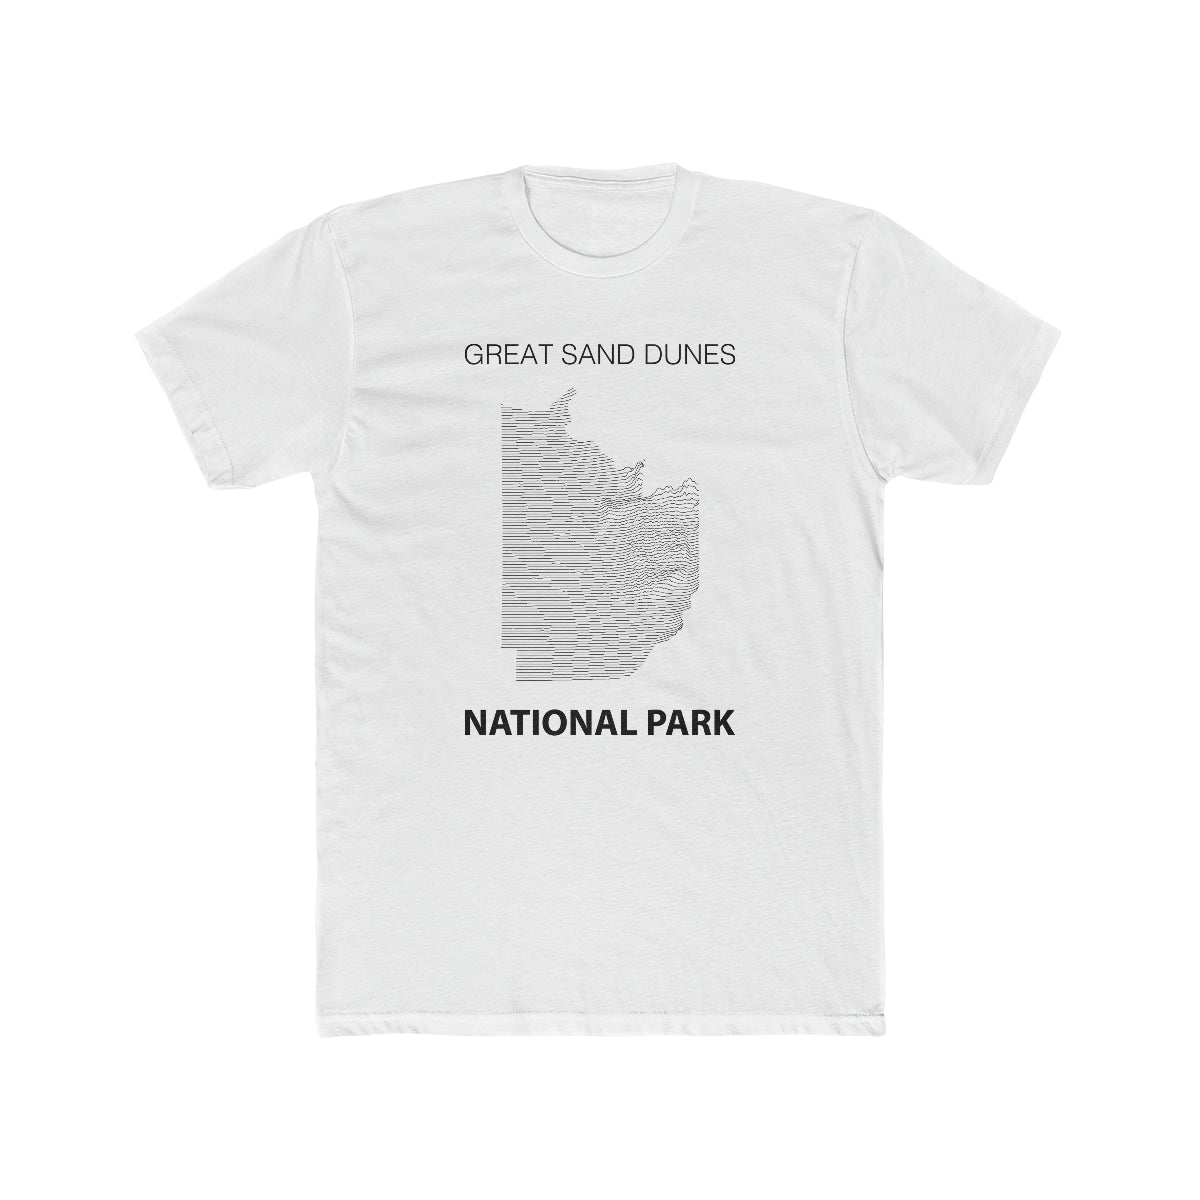 Great Sand Dunes National Park T-Shirt Lines